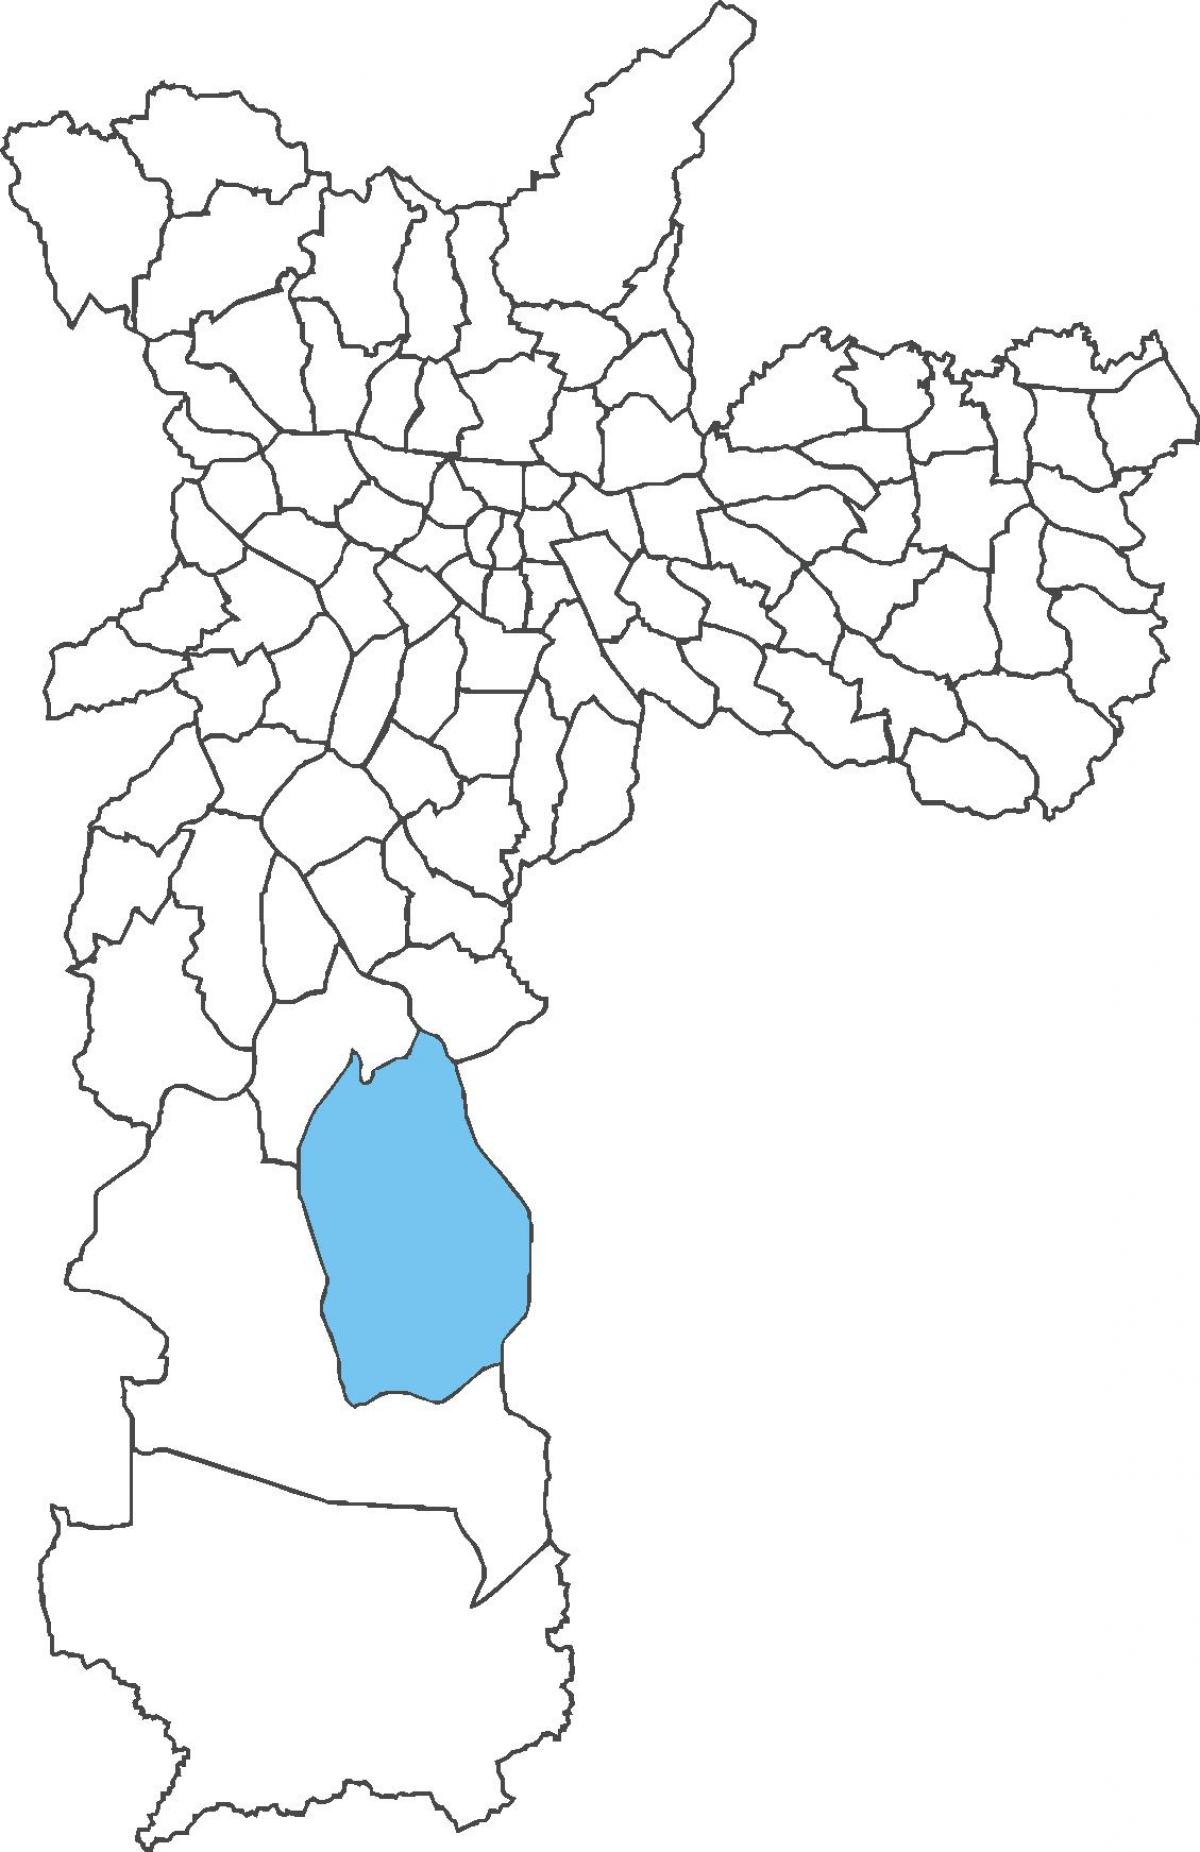 Mapa de Grajaú provincia